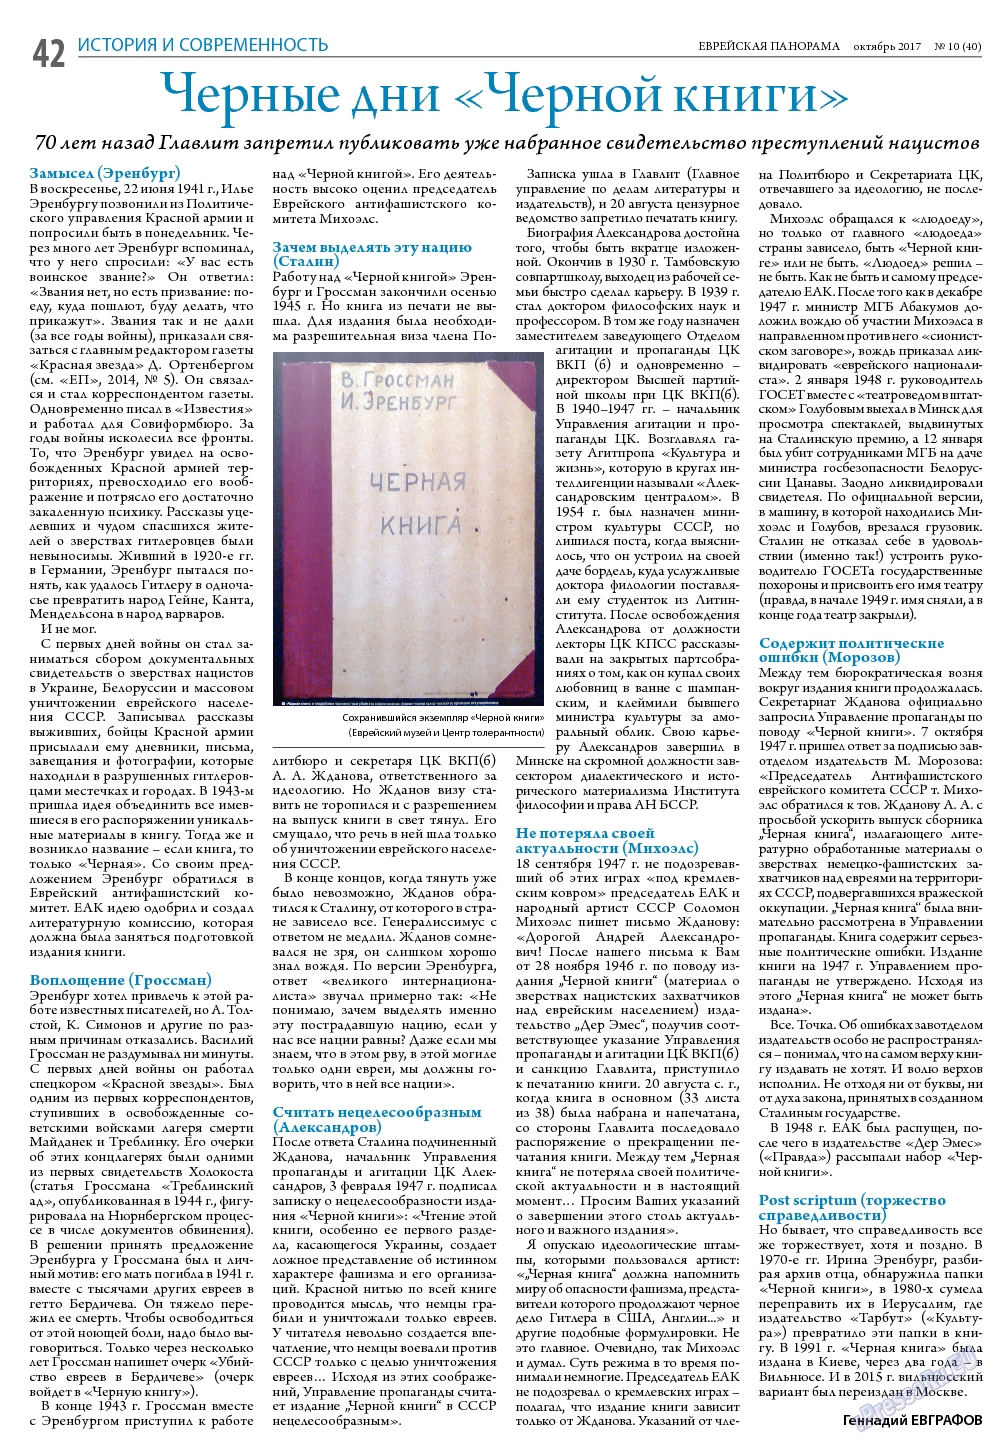 Еврейская панорама, газета. 2017 №10 стр.42